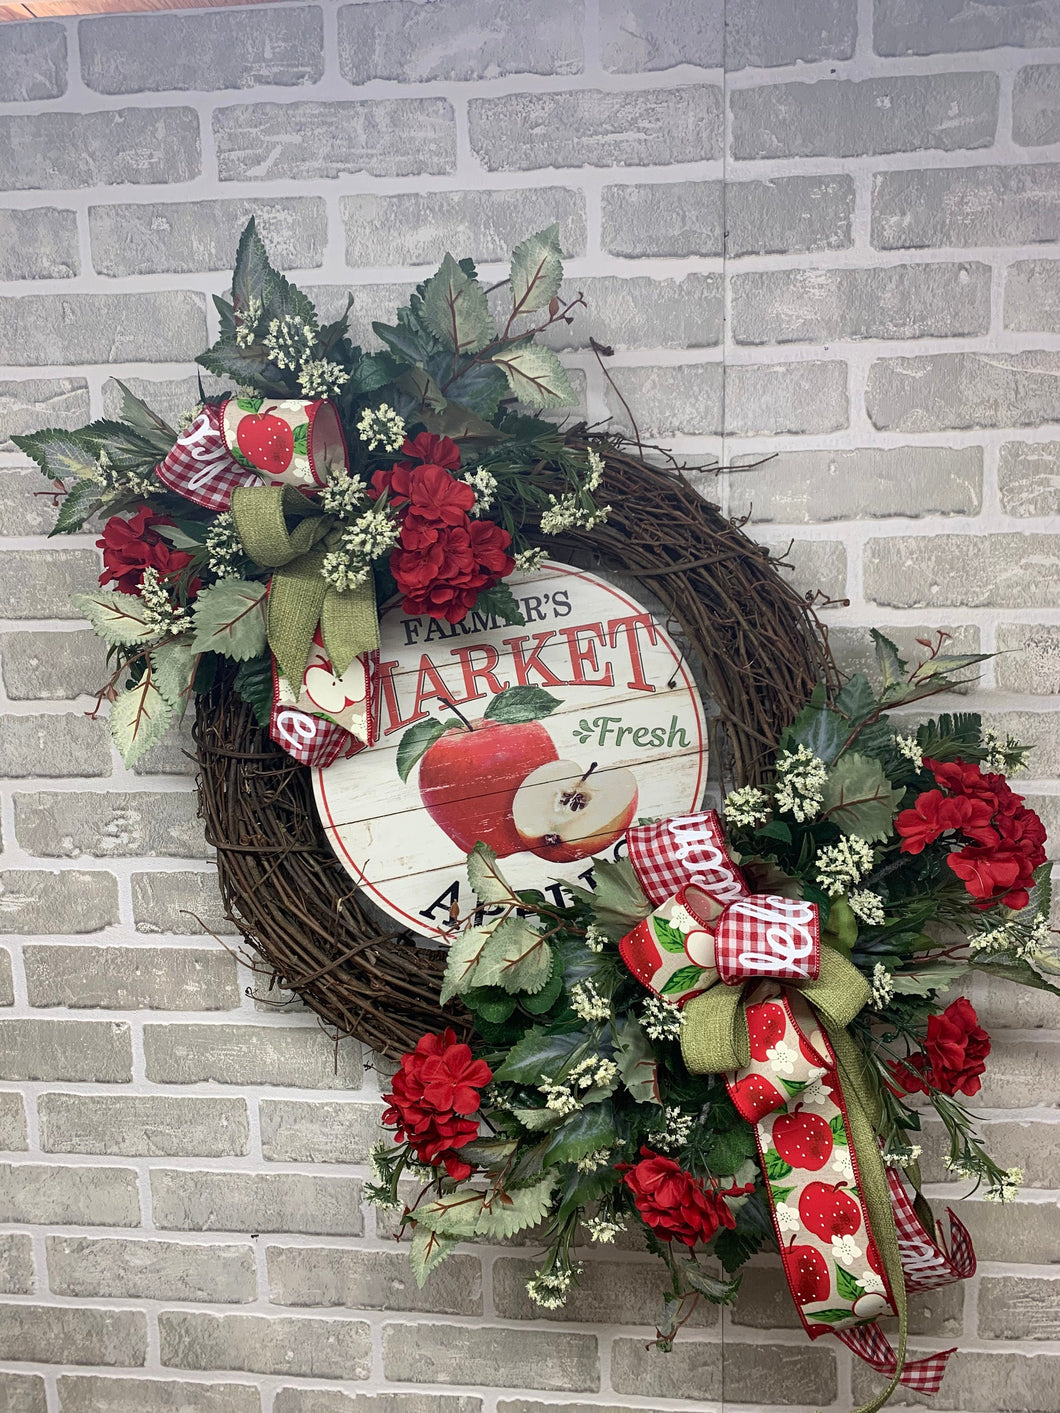 Farmers market home decor wreath